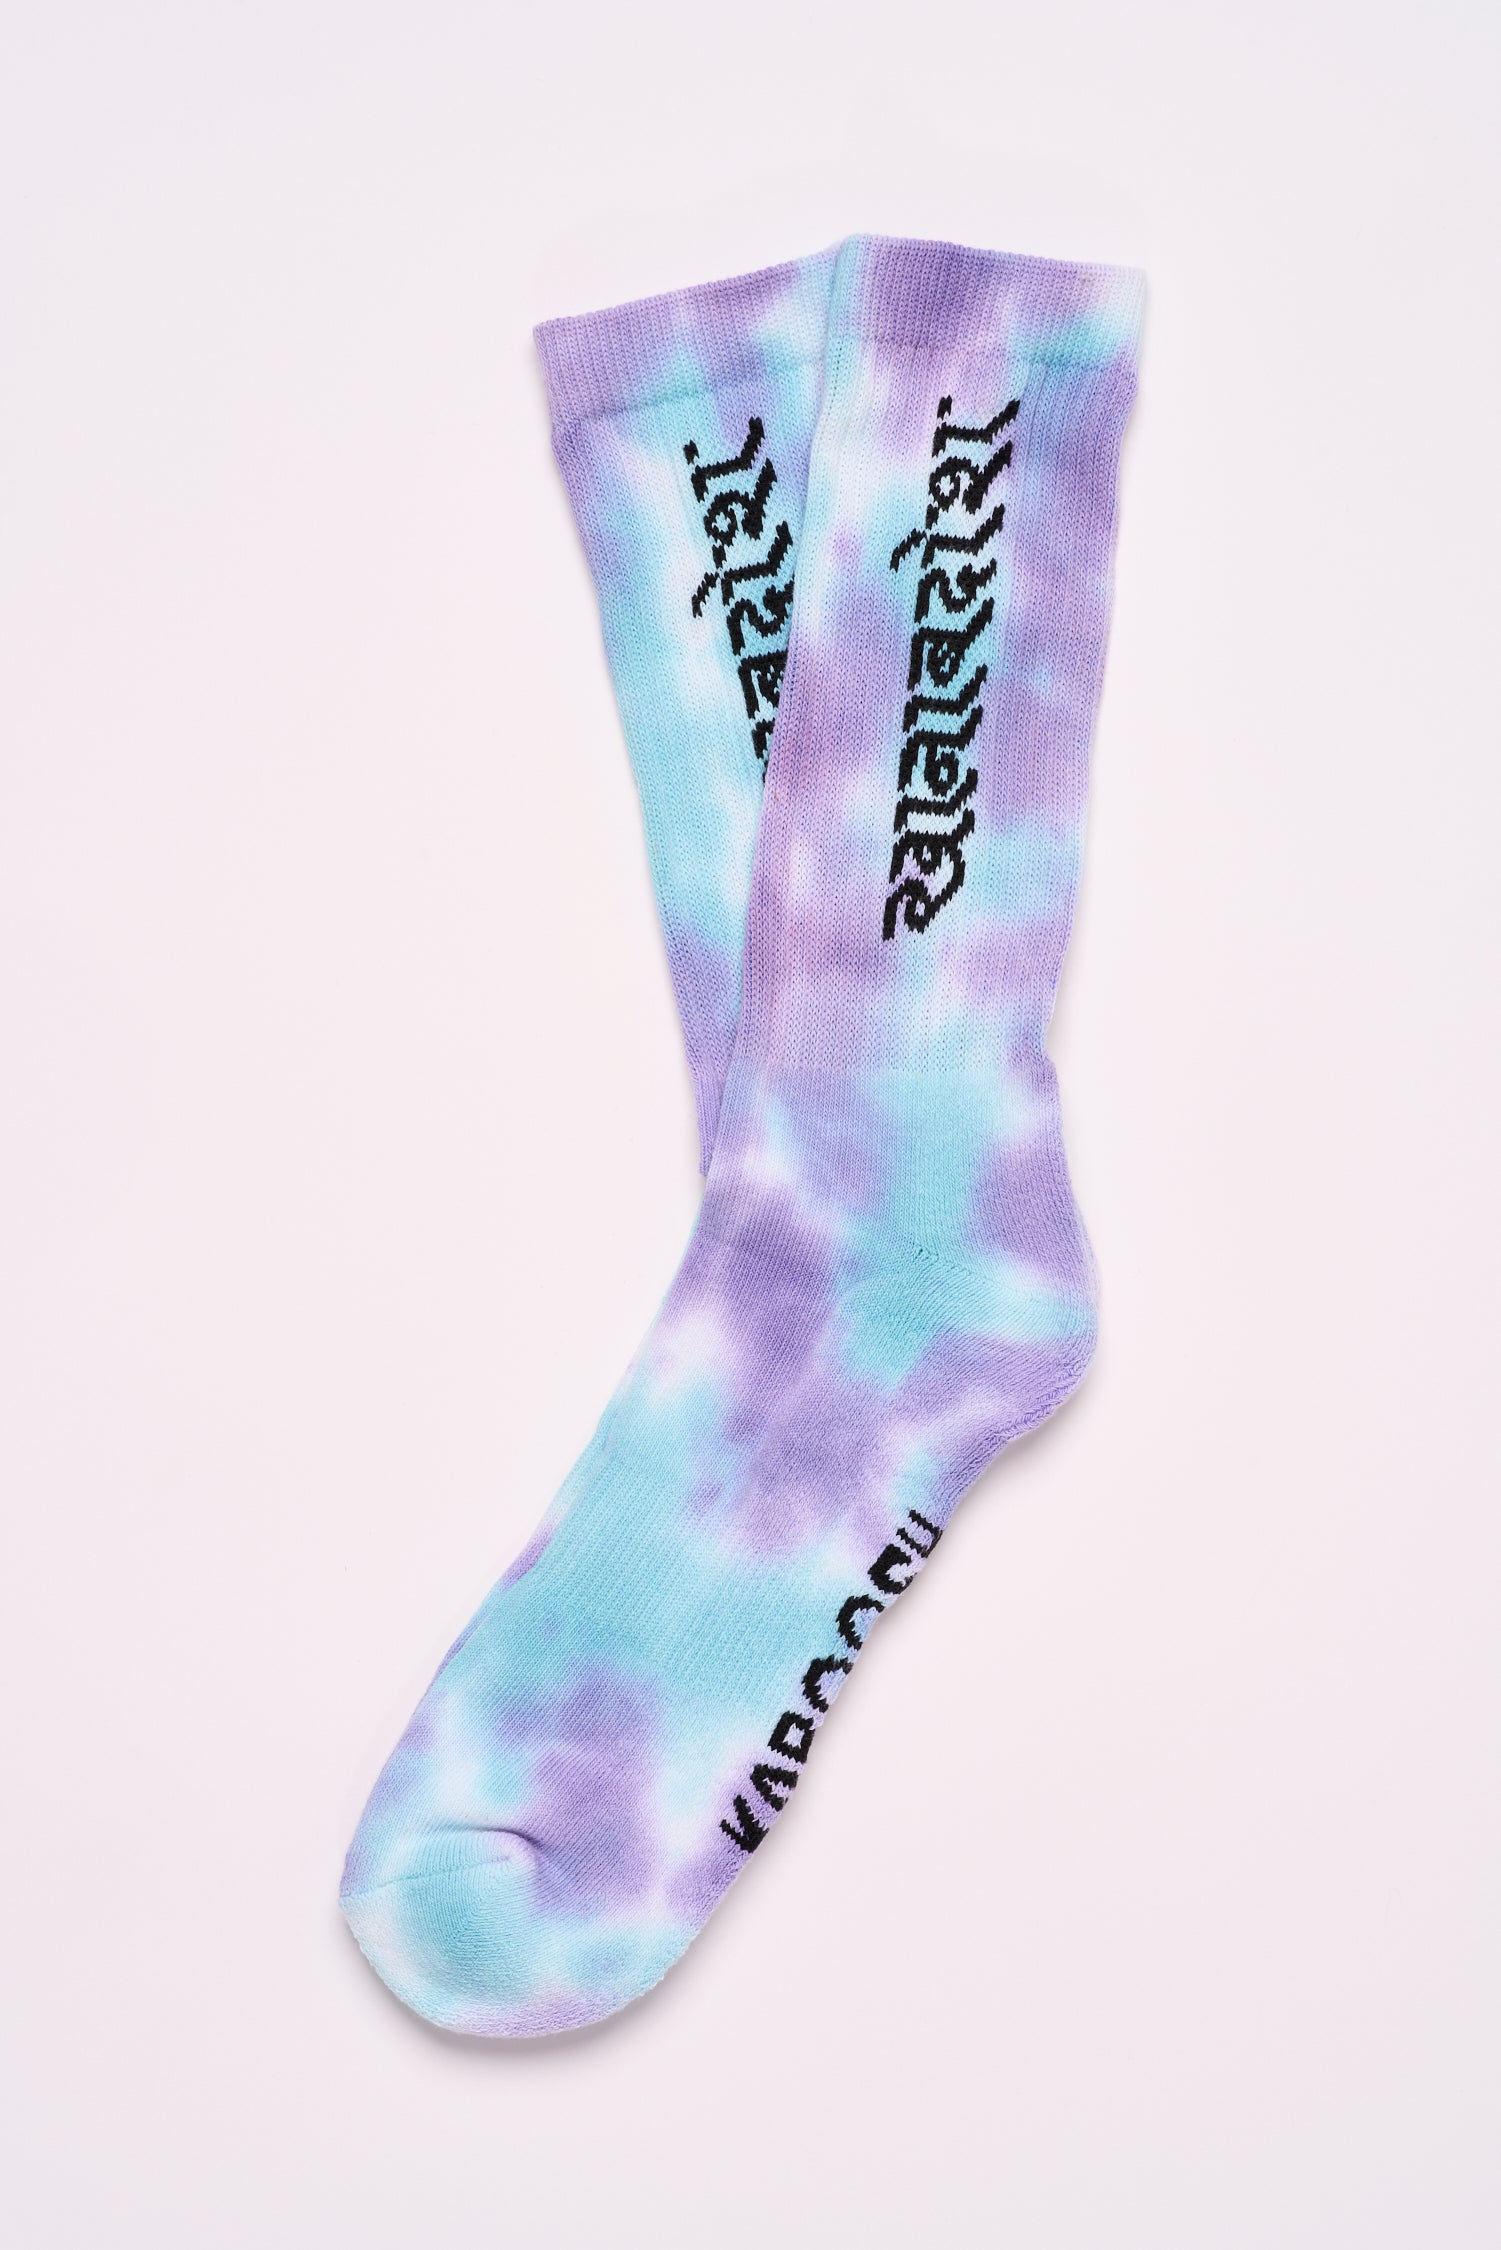 Socks - Hindi - Purple and sky blue - one size - Unisex